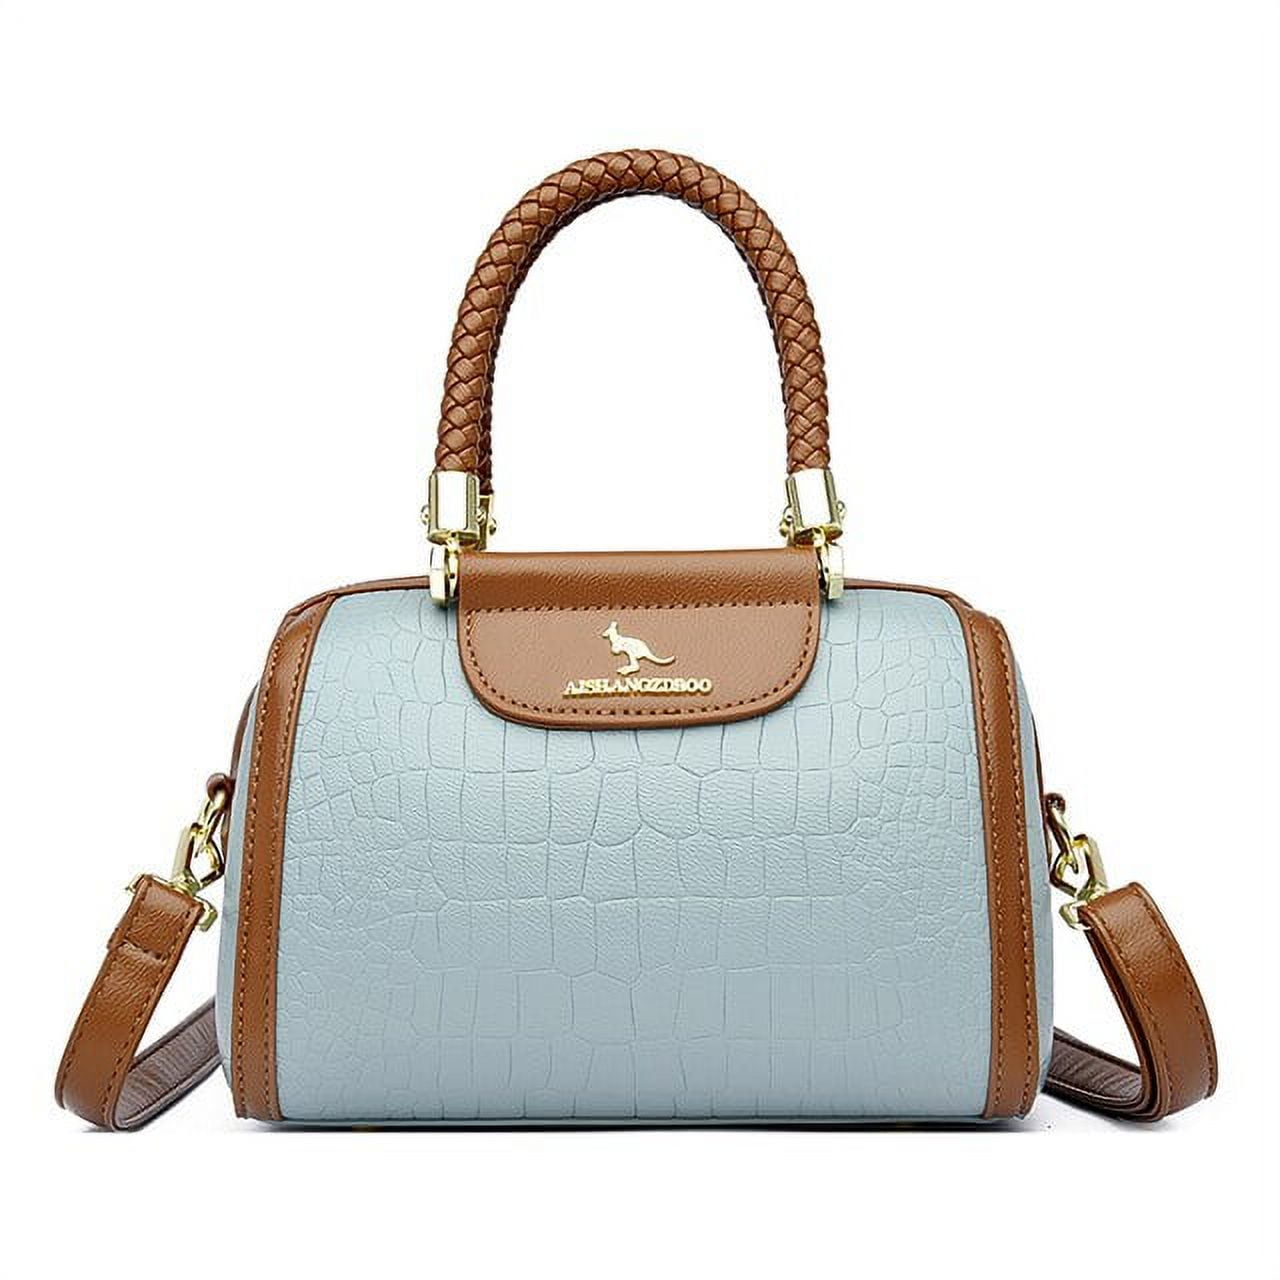 New Design Ladies Leather Handbags 2020/ Online Handbag Shopping Ideas - branded  ladies handbags - YouTube